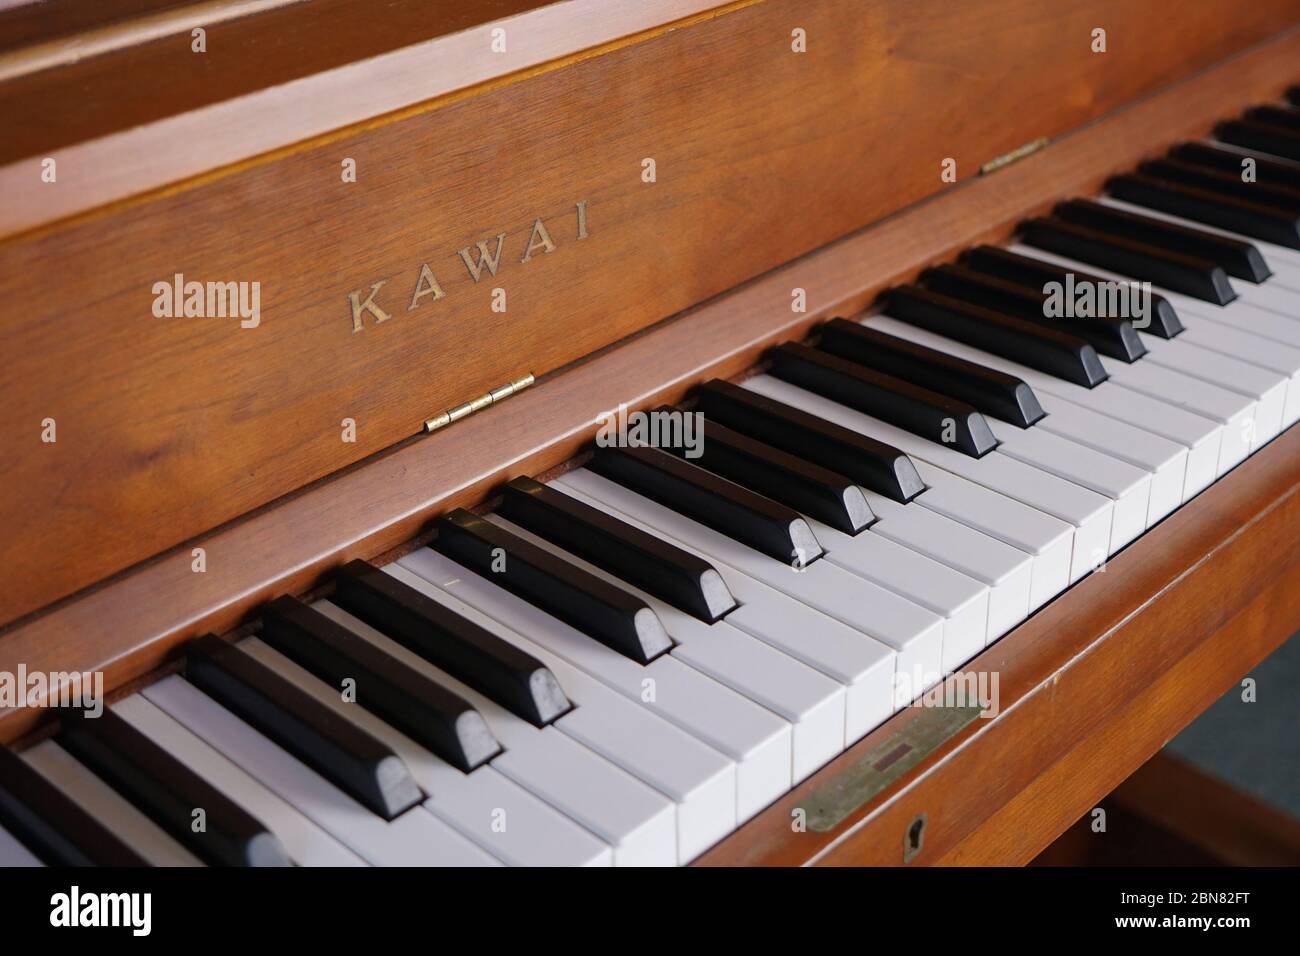 STANWELL TOPS, AUSTRALIA - Nov 10, 2019: Used Kawia Upright Pinano  Instrument Stock Photo